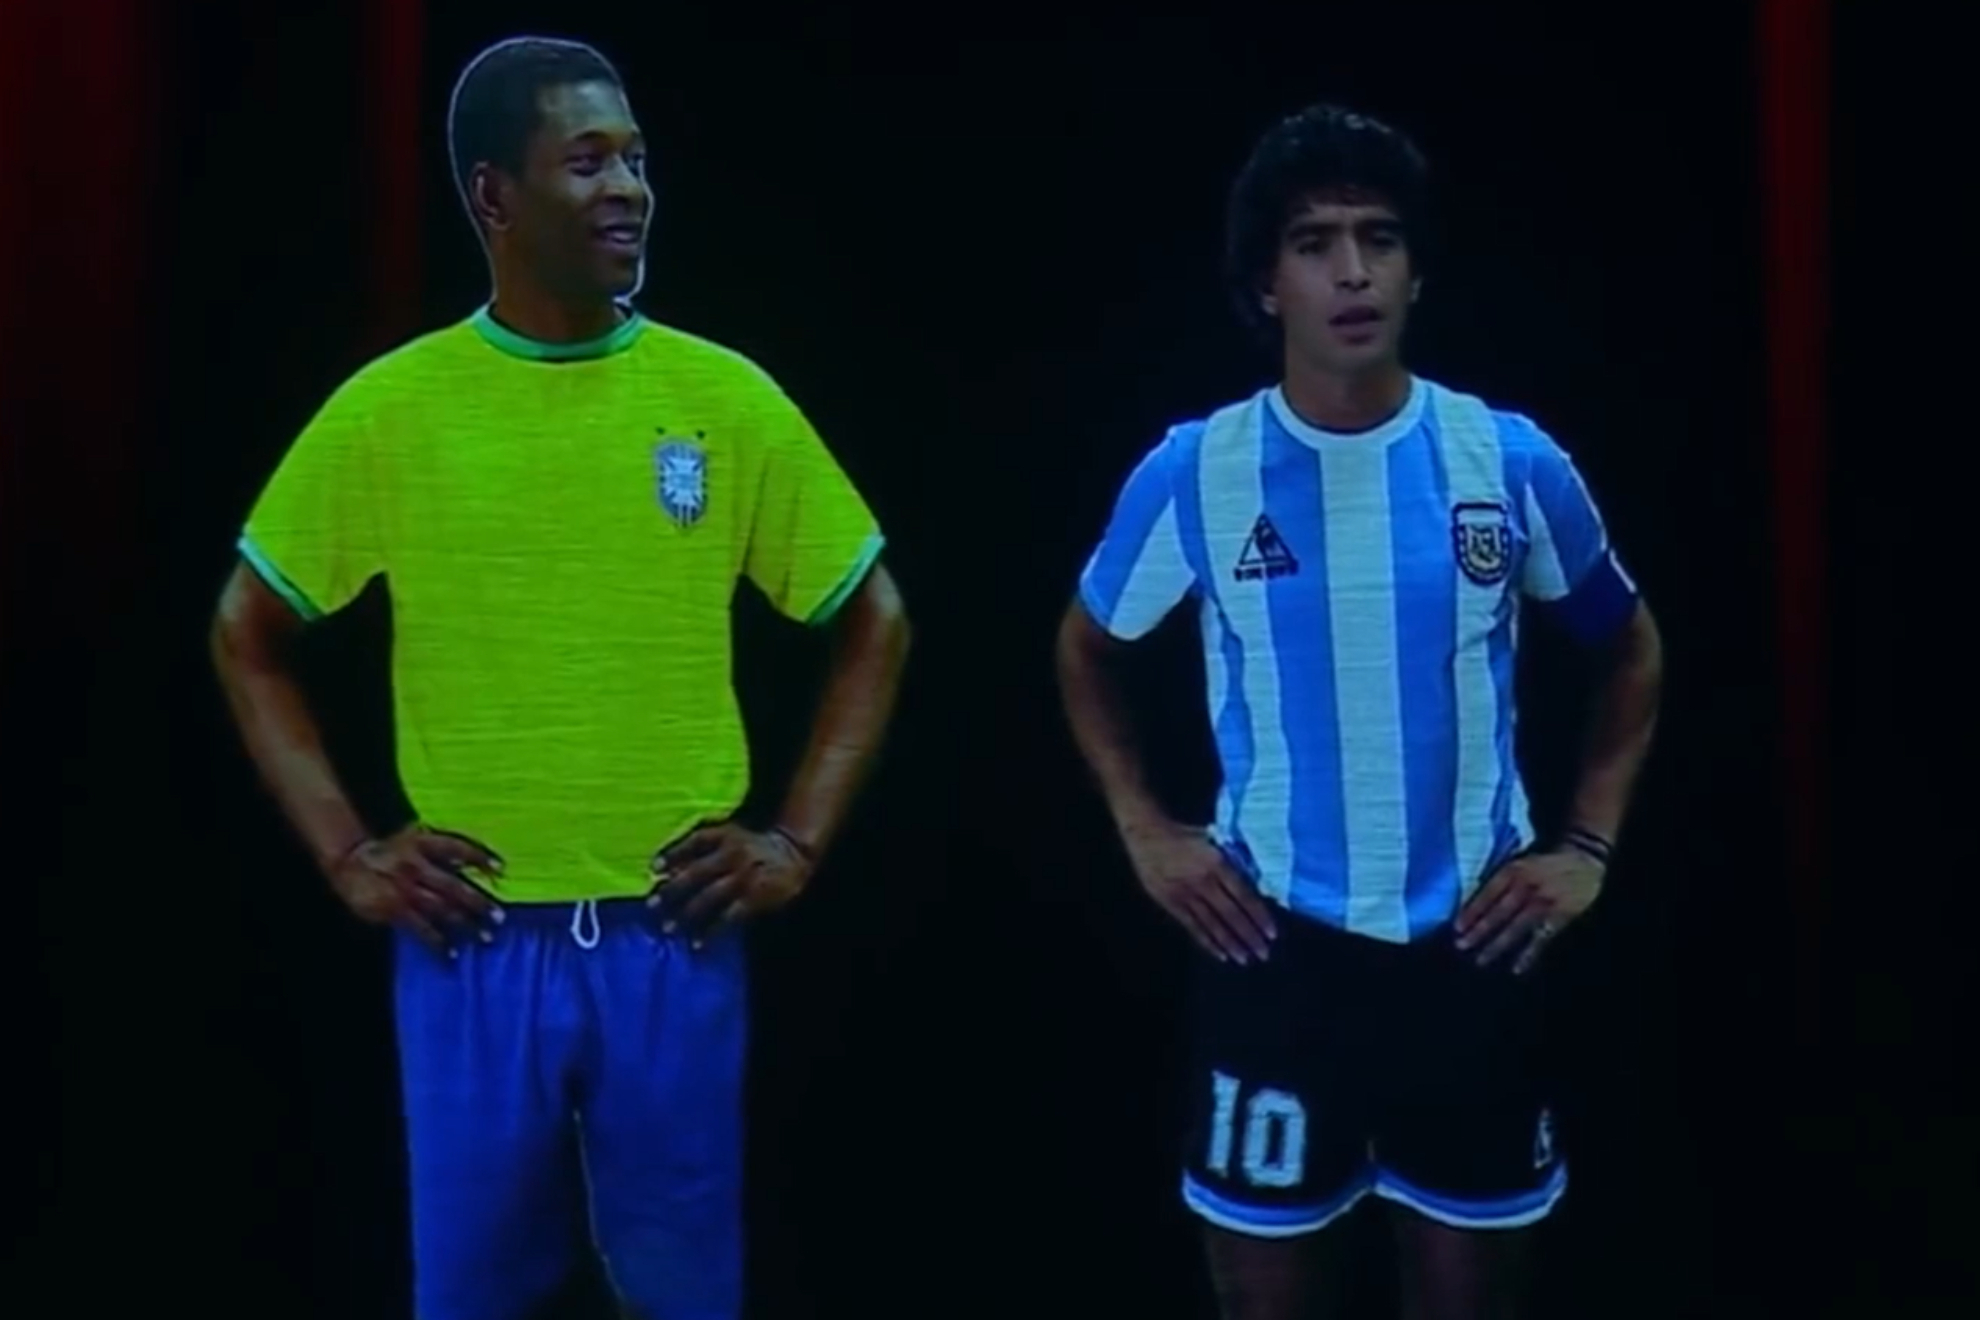 La tecnologa hologrfica 'revive' a Pel y Maradona para mandarle este mensaje a Messi